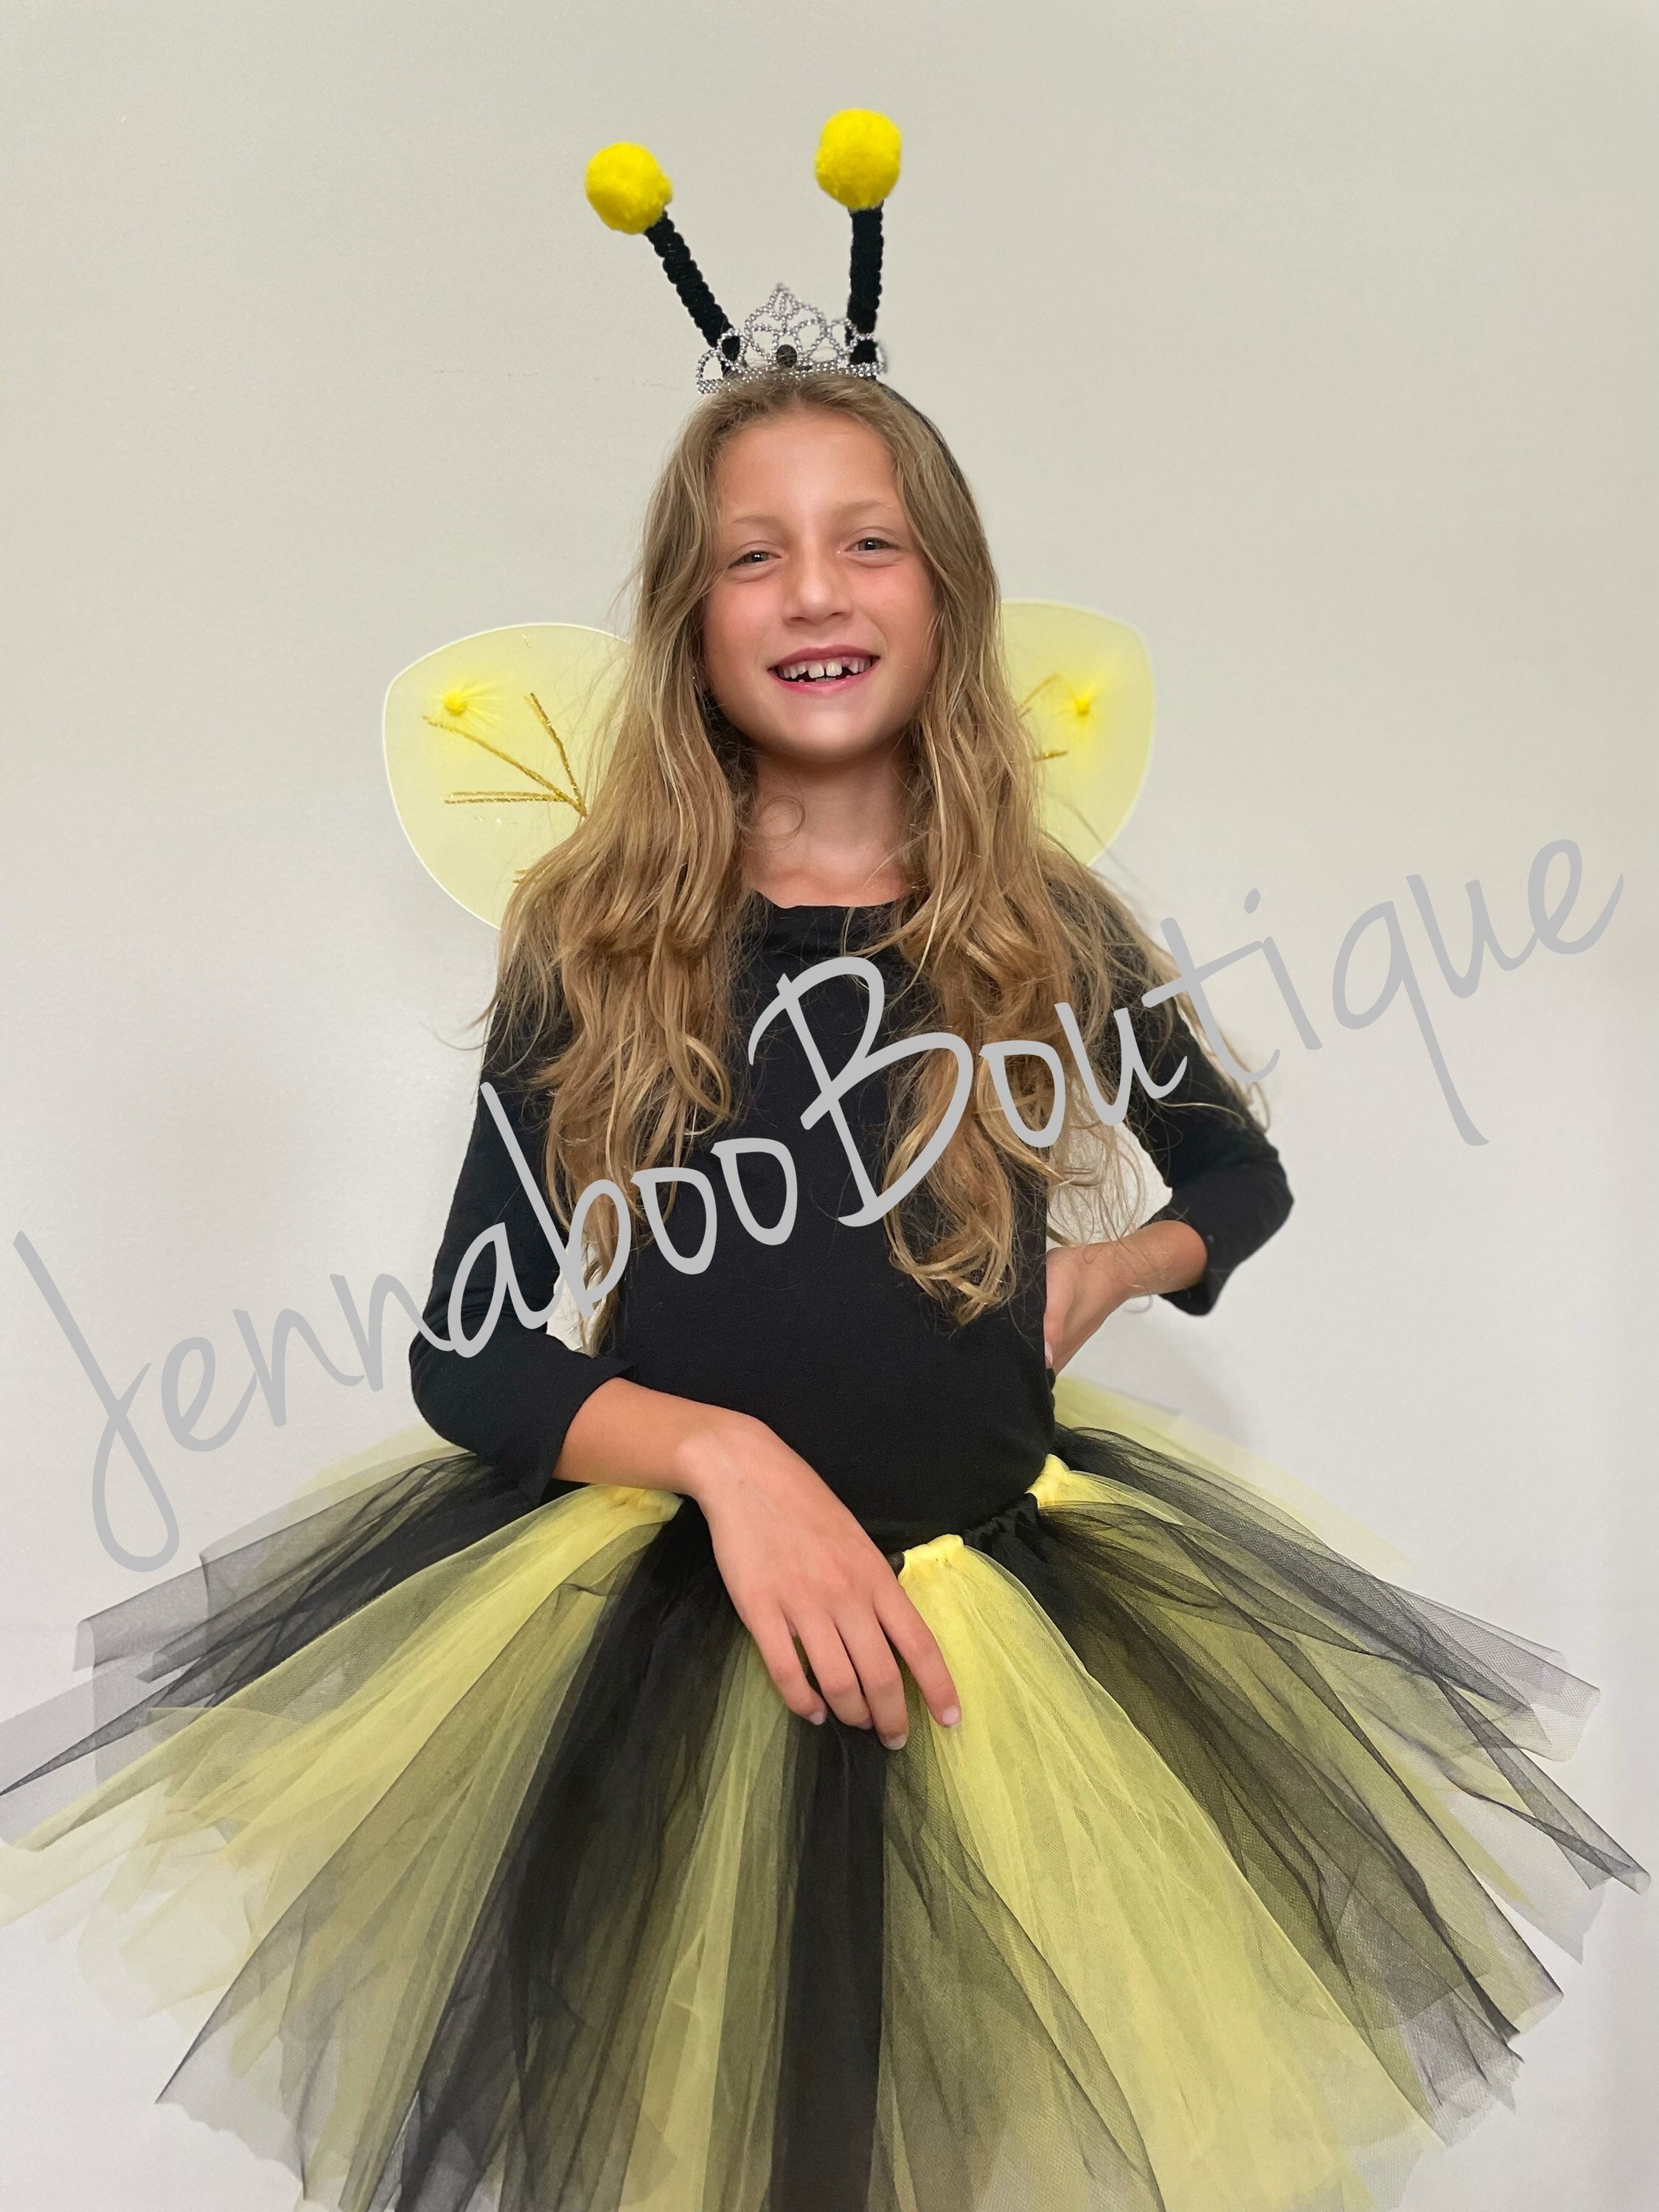 Girls Bee Costume - Complete Bumblebee Kids Costume Set with Tutu